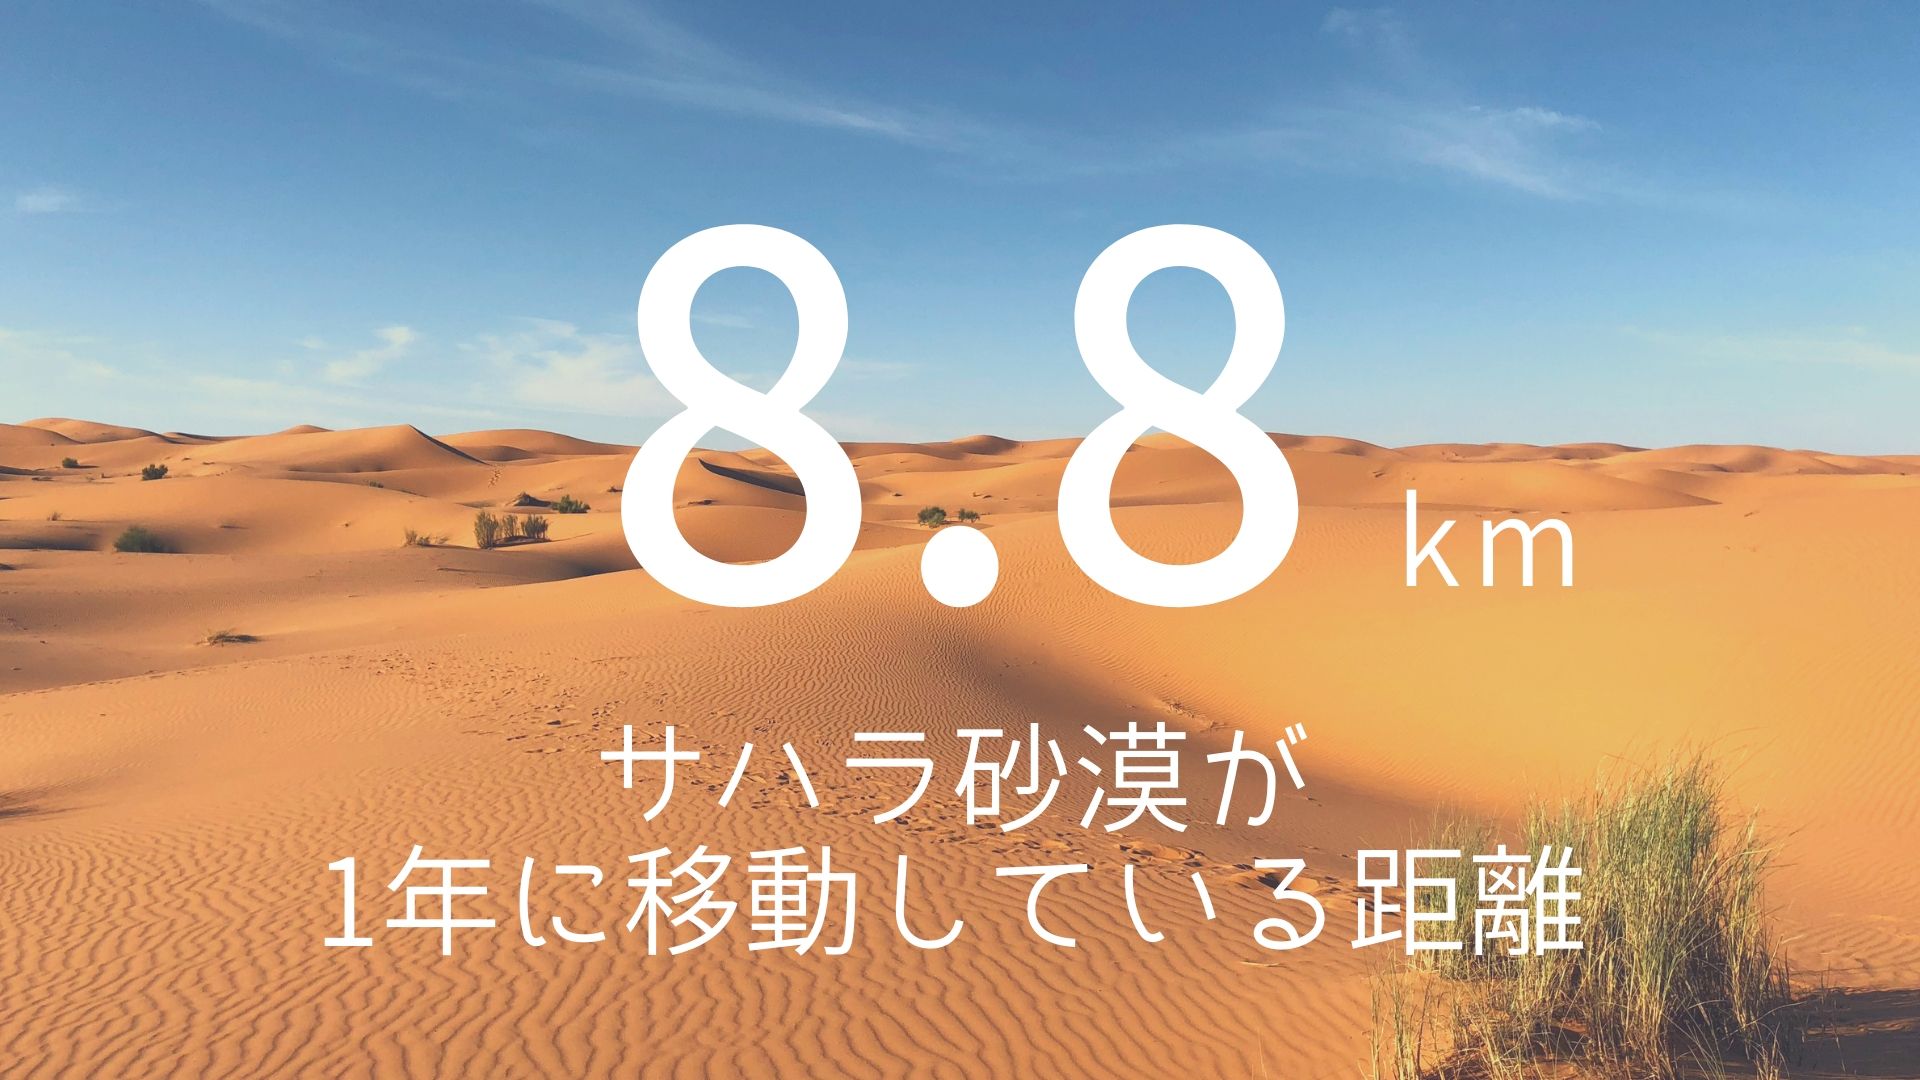 「8.8km」 >>> サハラ砂漠が1年に移動している距離。